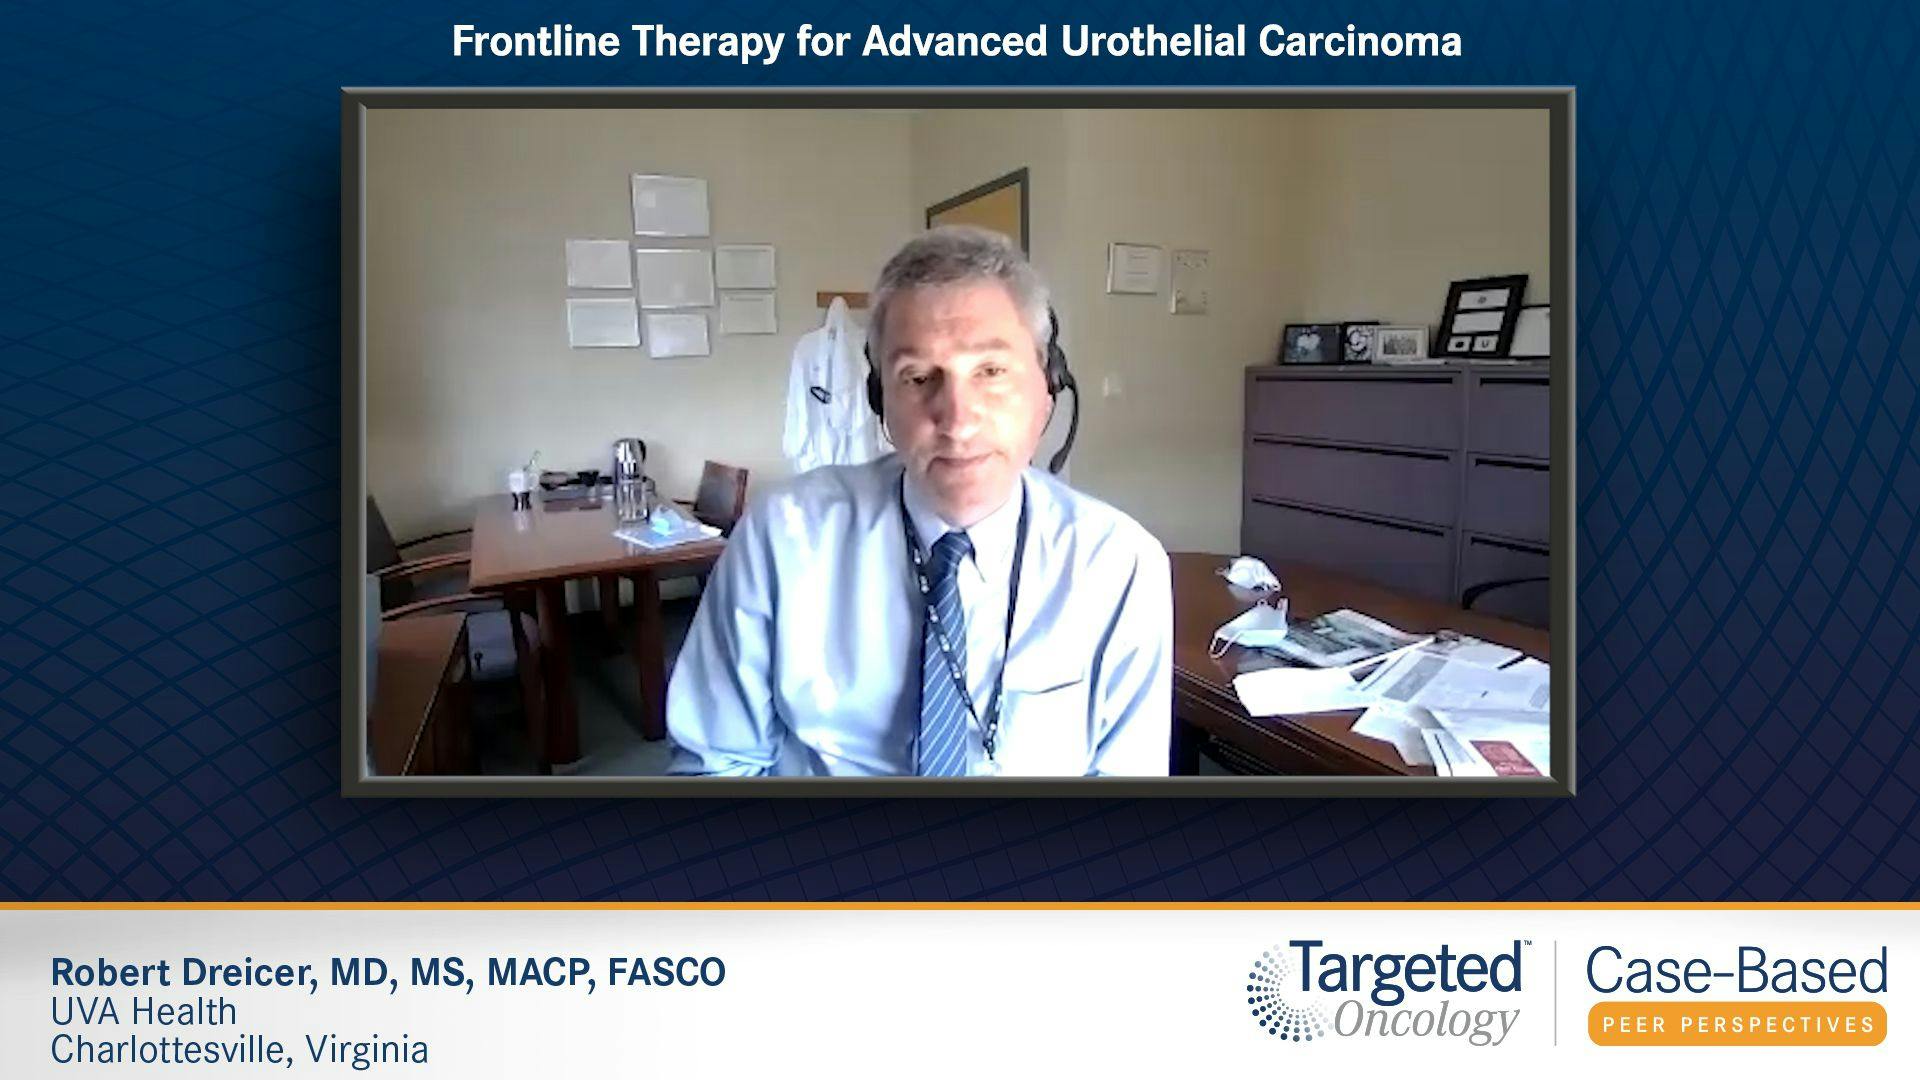 Progress in Advanced Urothelial Carcinoma